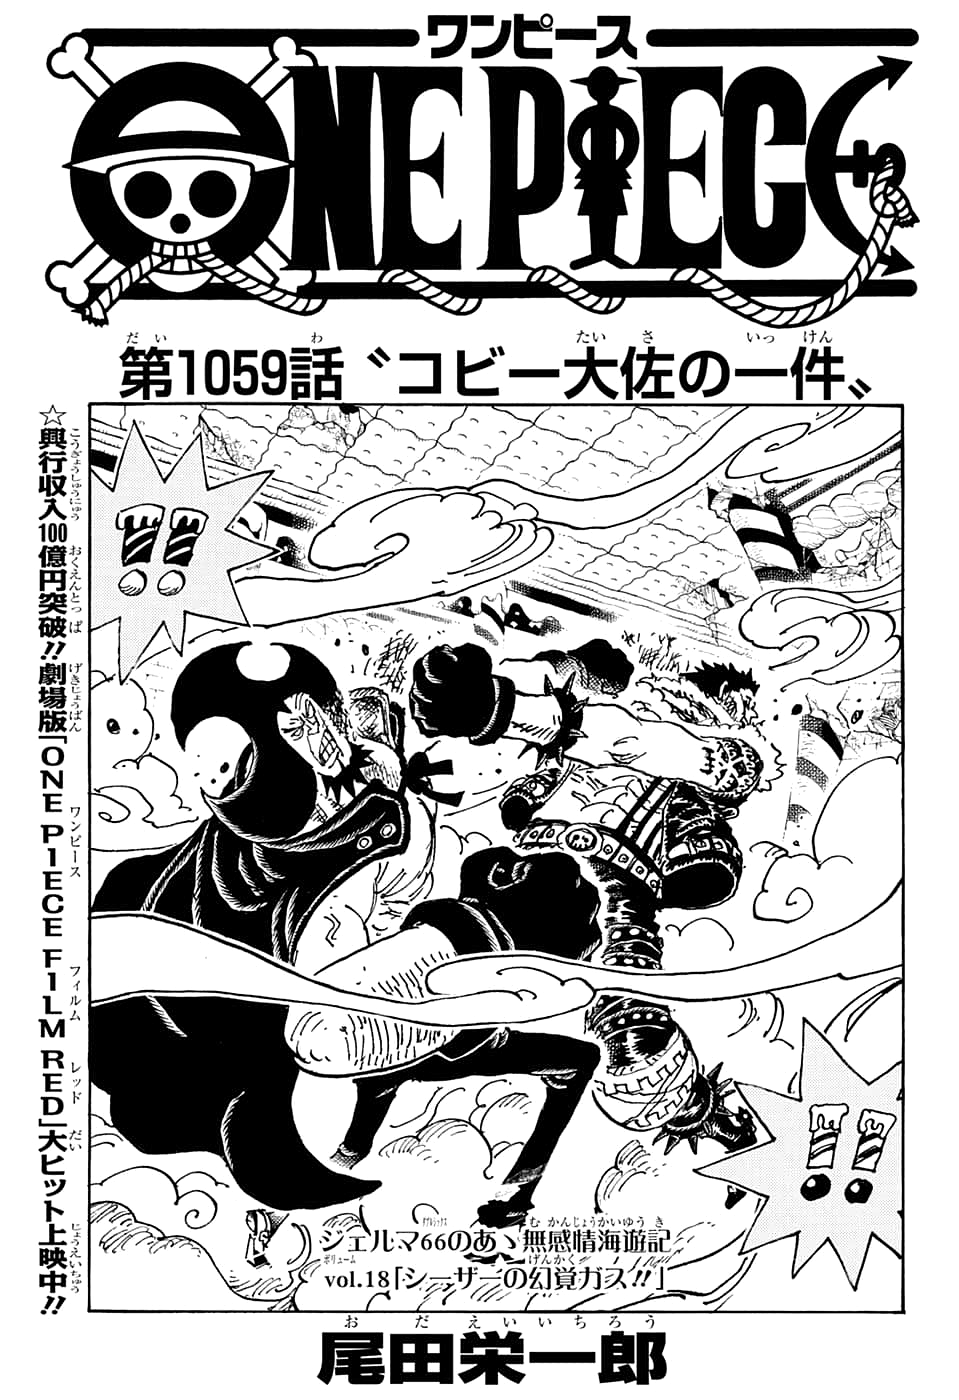 Capítulo 1079, One Piece Wiki